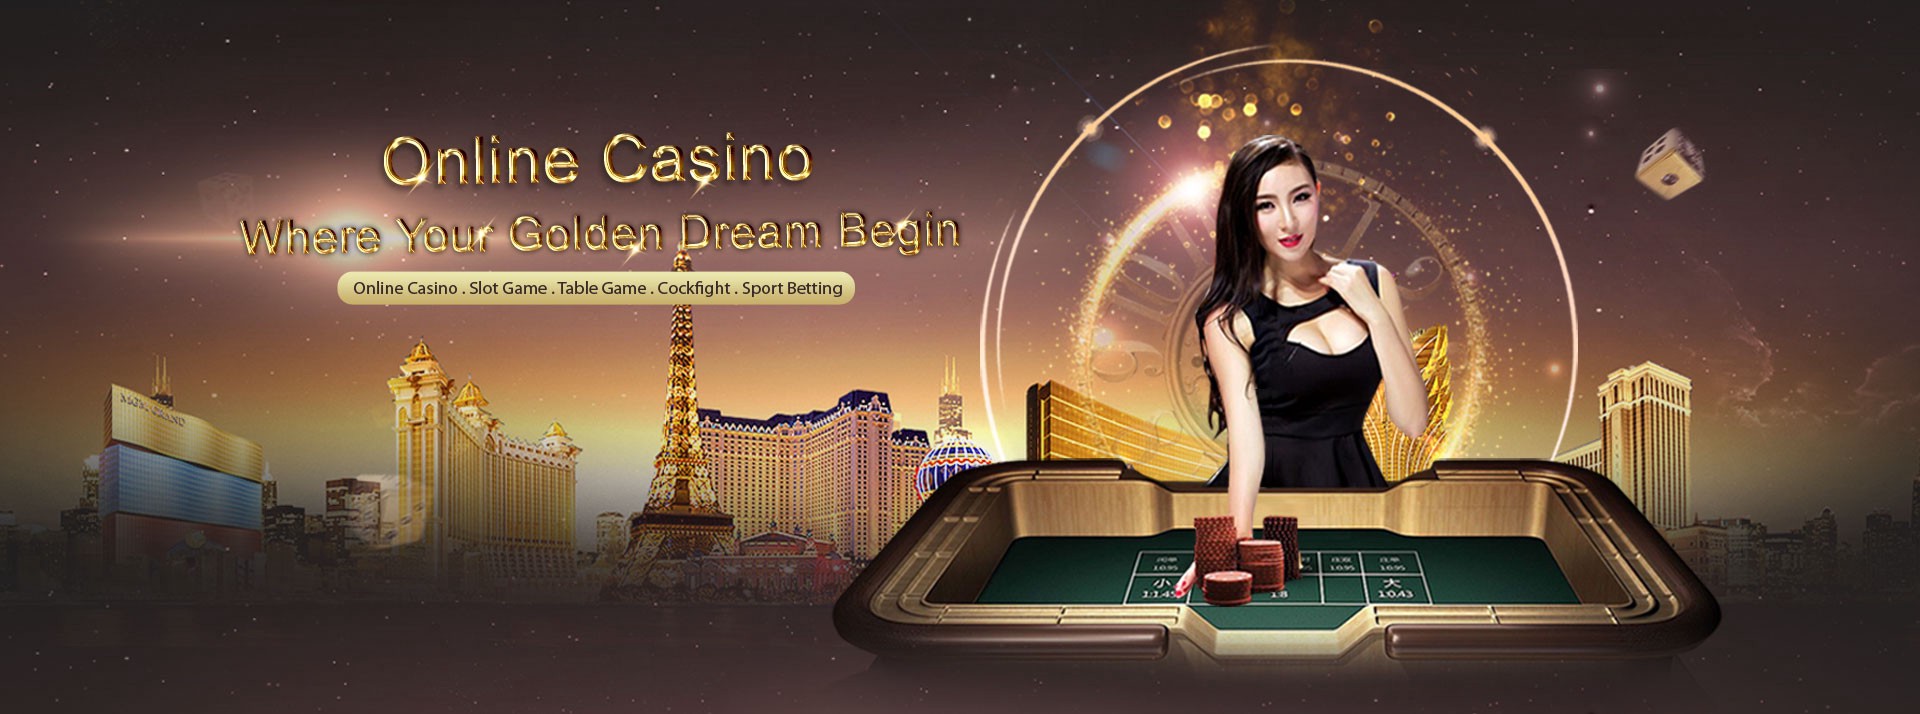 1 Q LFEyweQF4aMrN48k2bkQ - Top 3 Best Online Malaysian Casinos